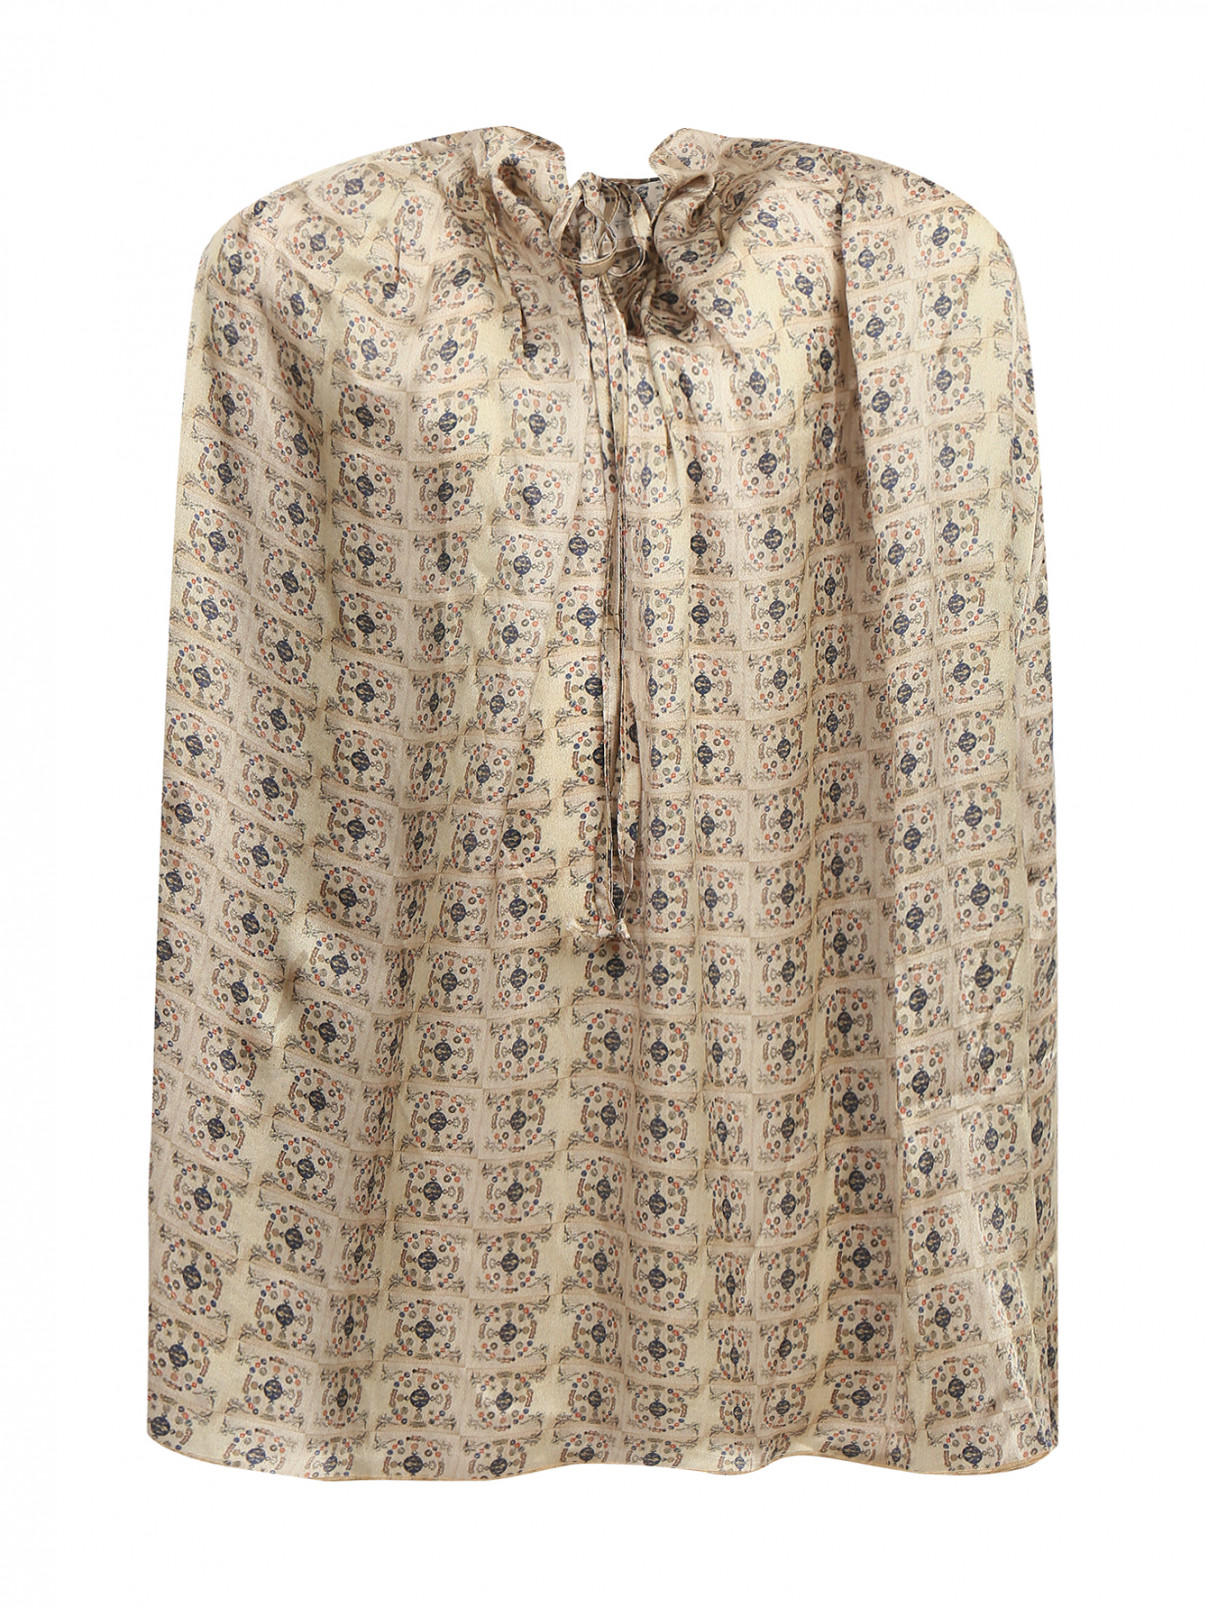 Блуза из шелка с узором Roma e Toska  –  Общий вид  – Цвет:  Бежевый